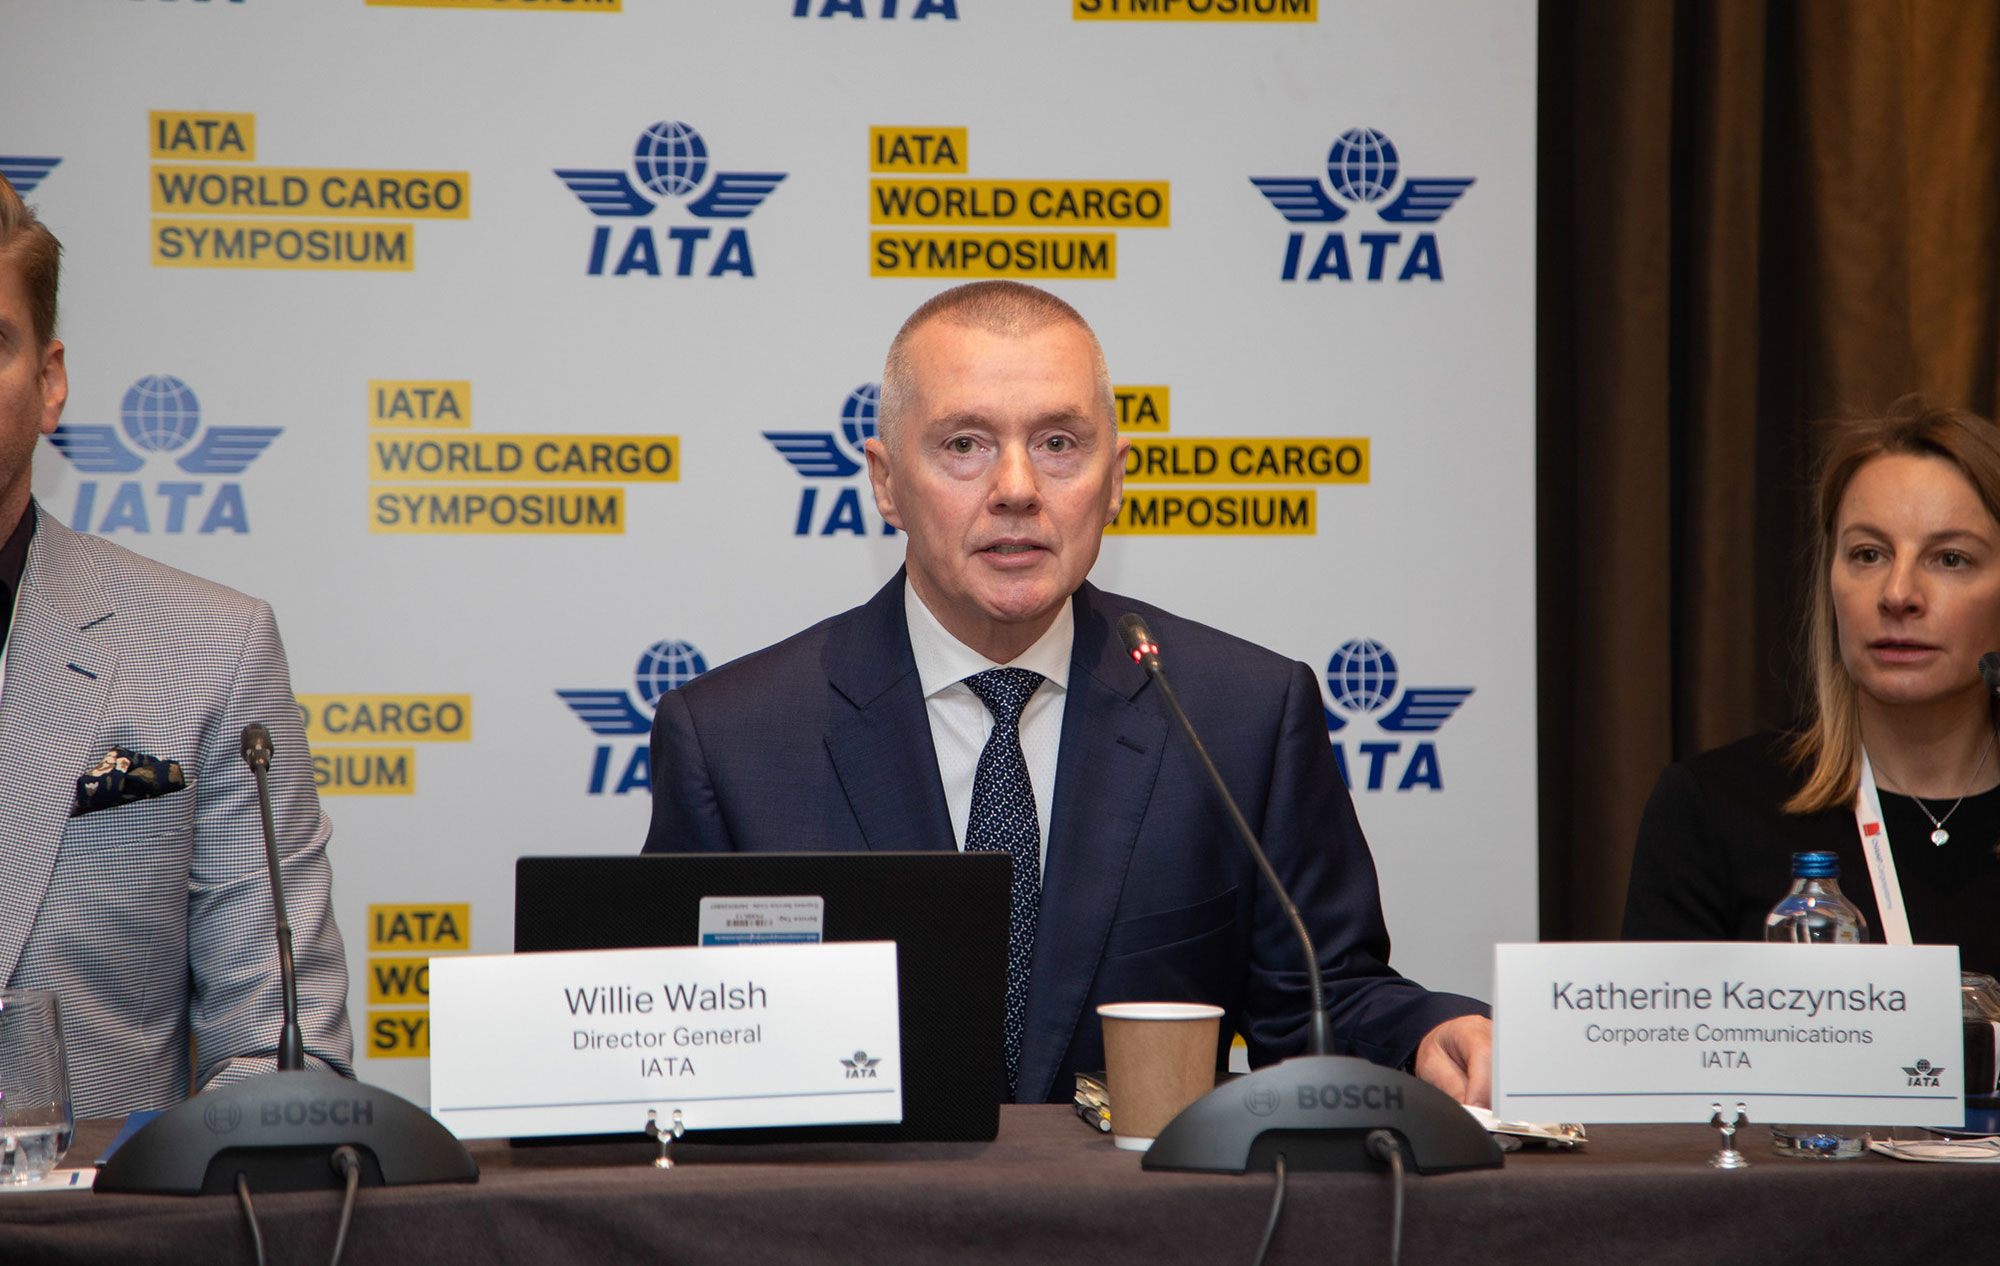 IATA Secretary General Willie Walsh speaking at the World Cargo Symposium in Istanbul last year. (image courtesy IATA)